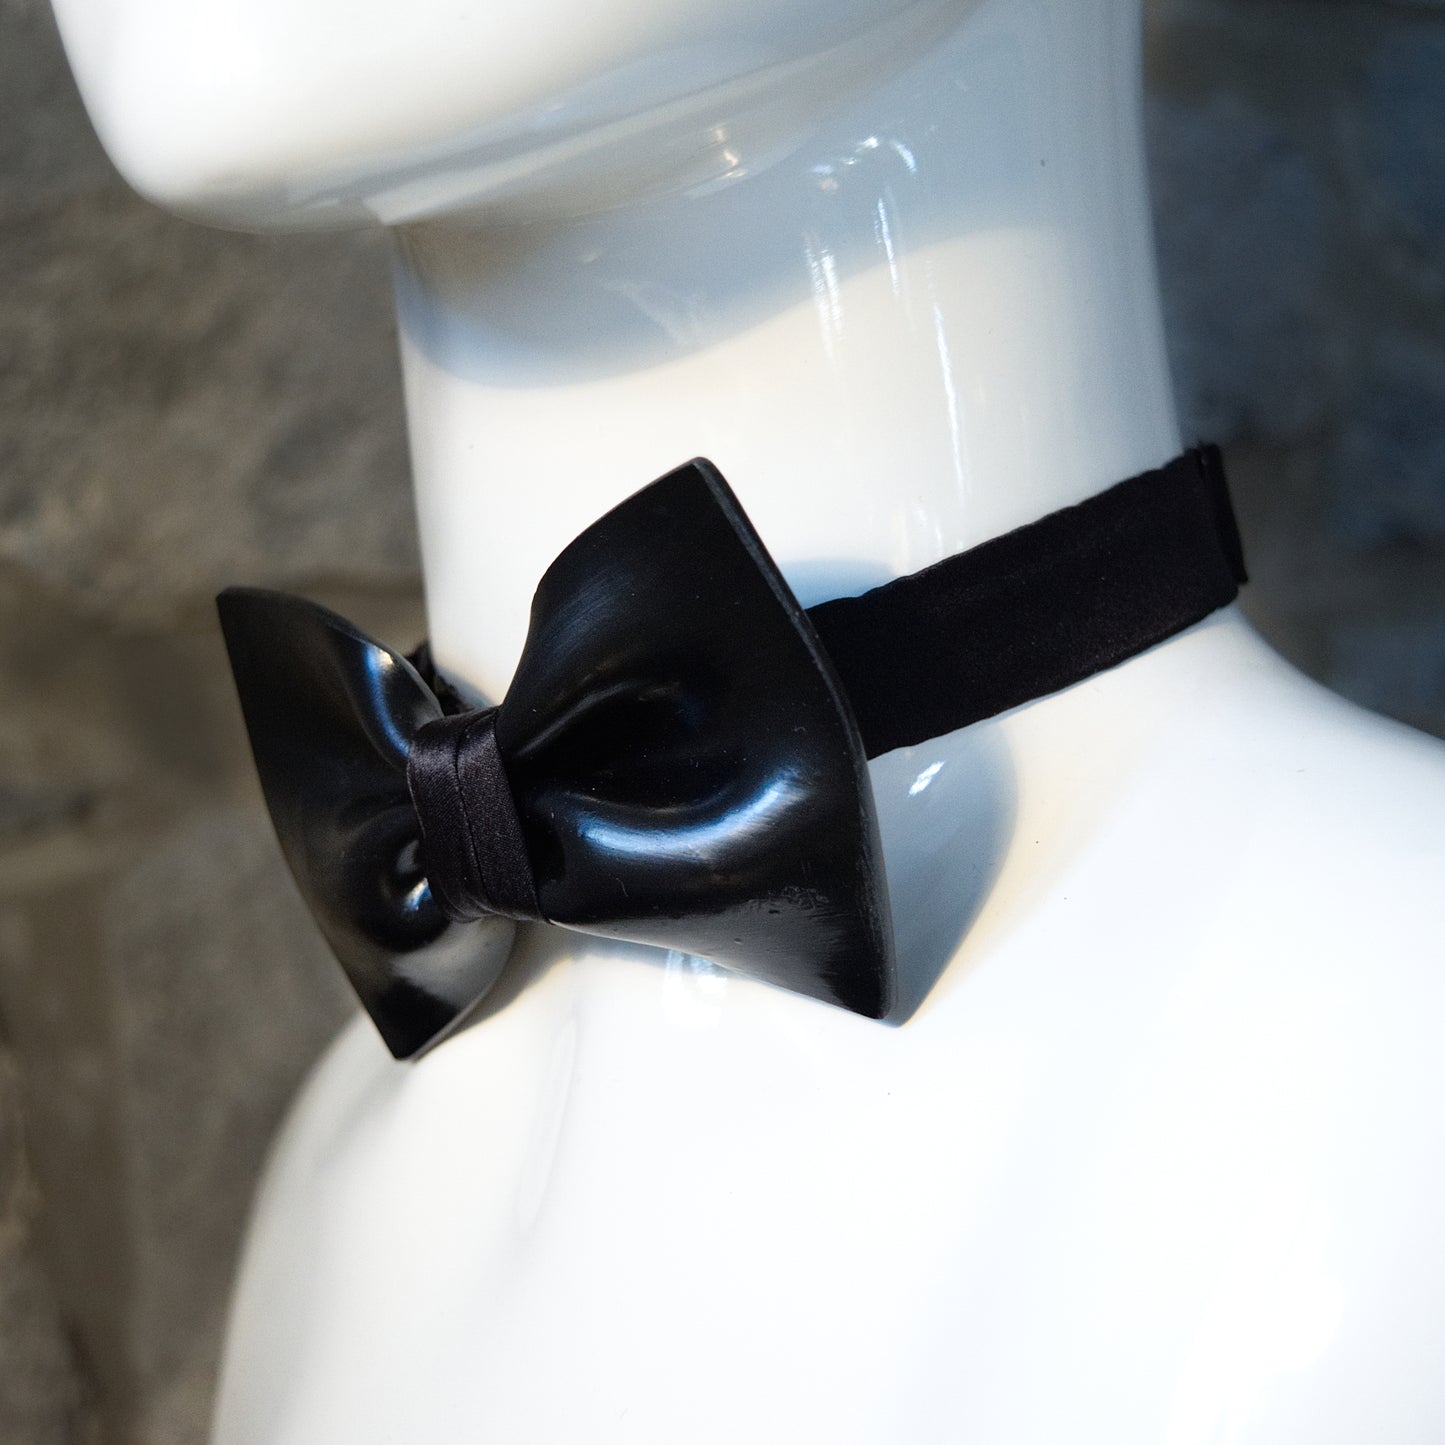 Formal Black Bow Tie